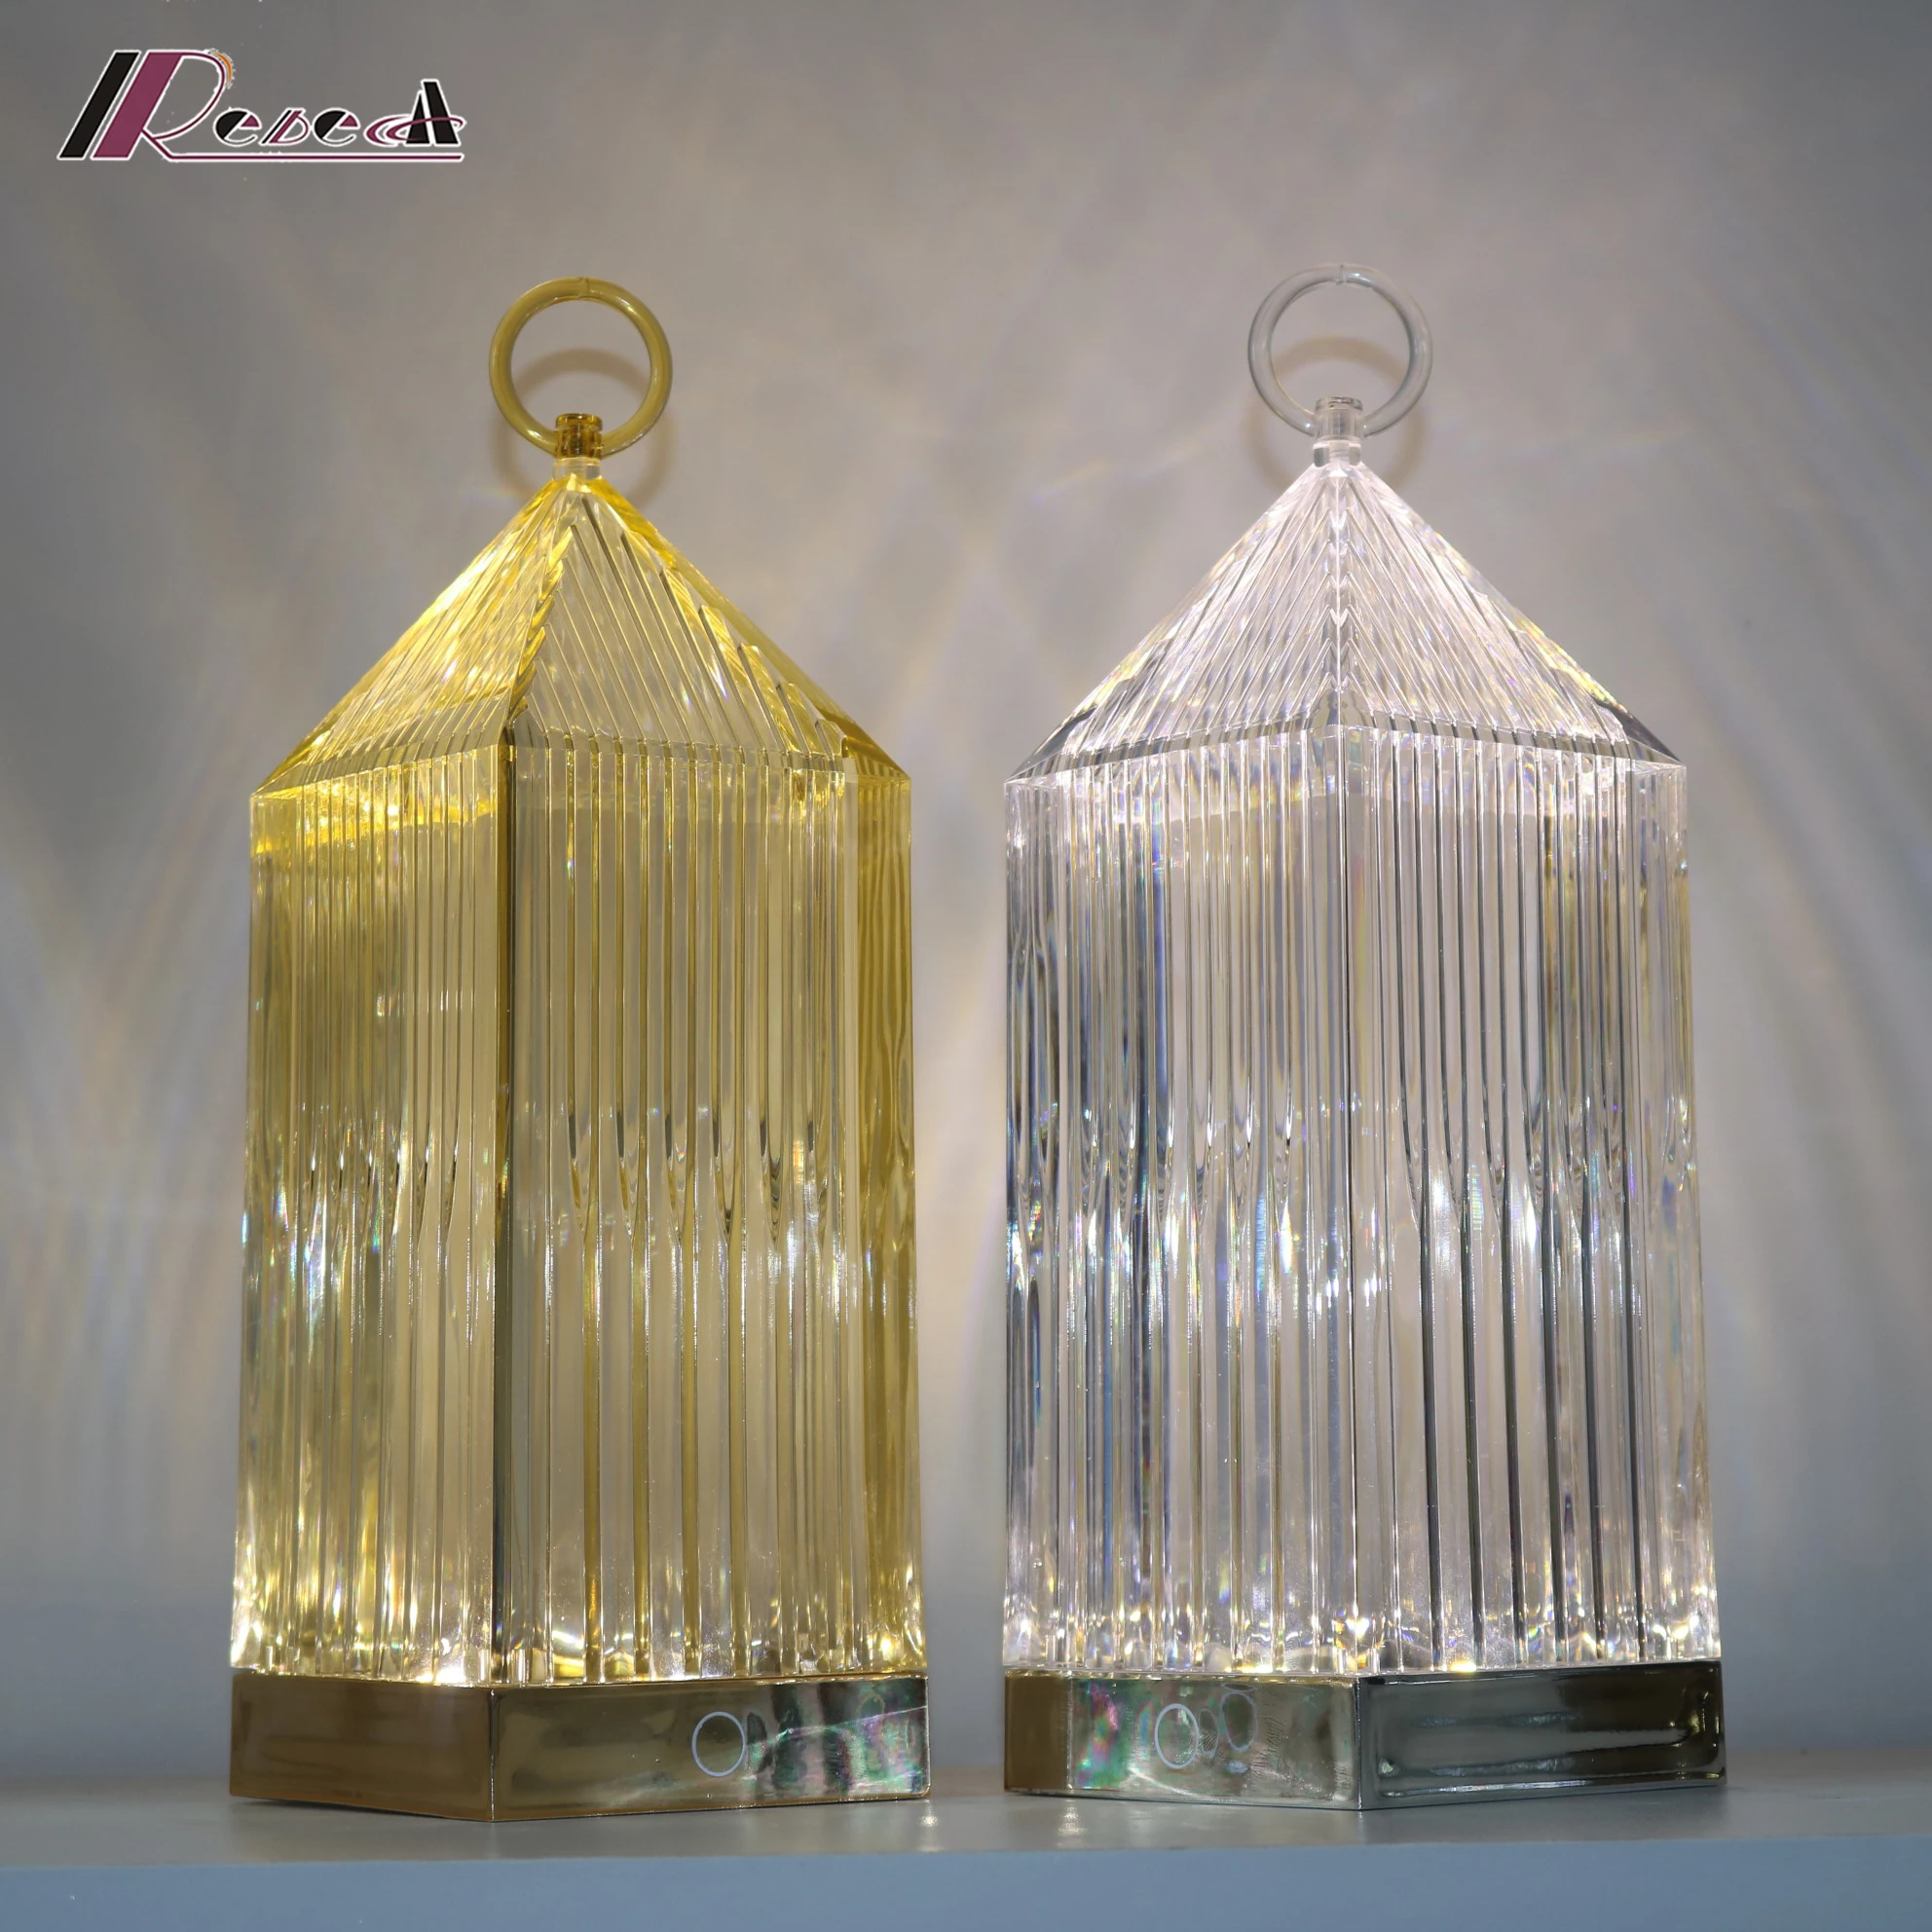 

Acrylic Crystal Table Lamp Italian Katell Design Battery Lantern Rechargeable Restaurant Table Light Decorative Night Lights